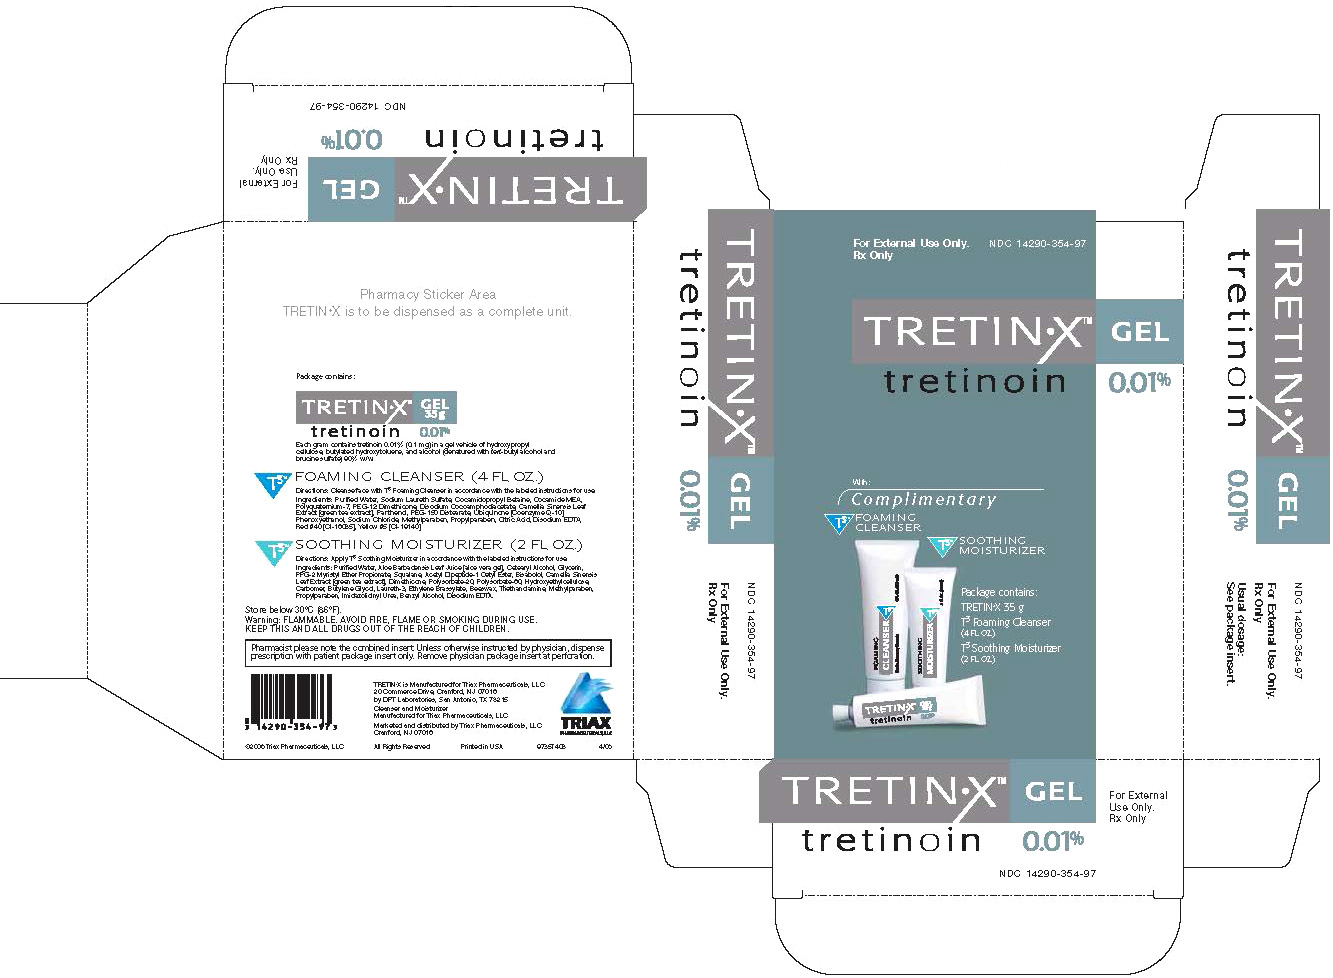 
tretin-x-kit-02
